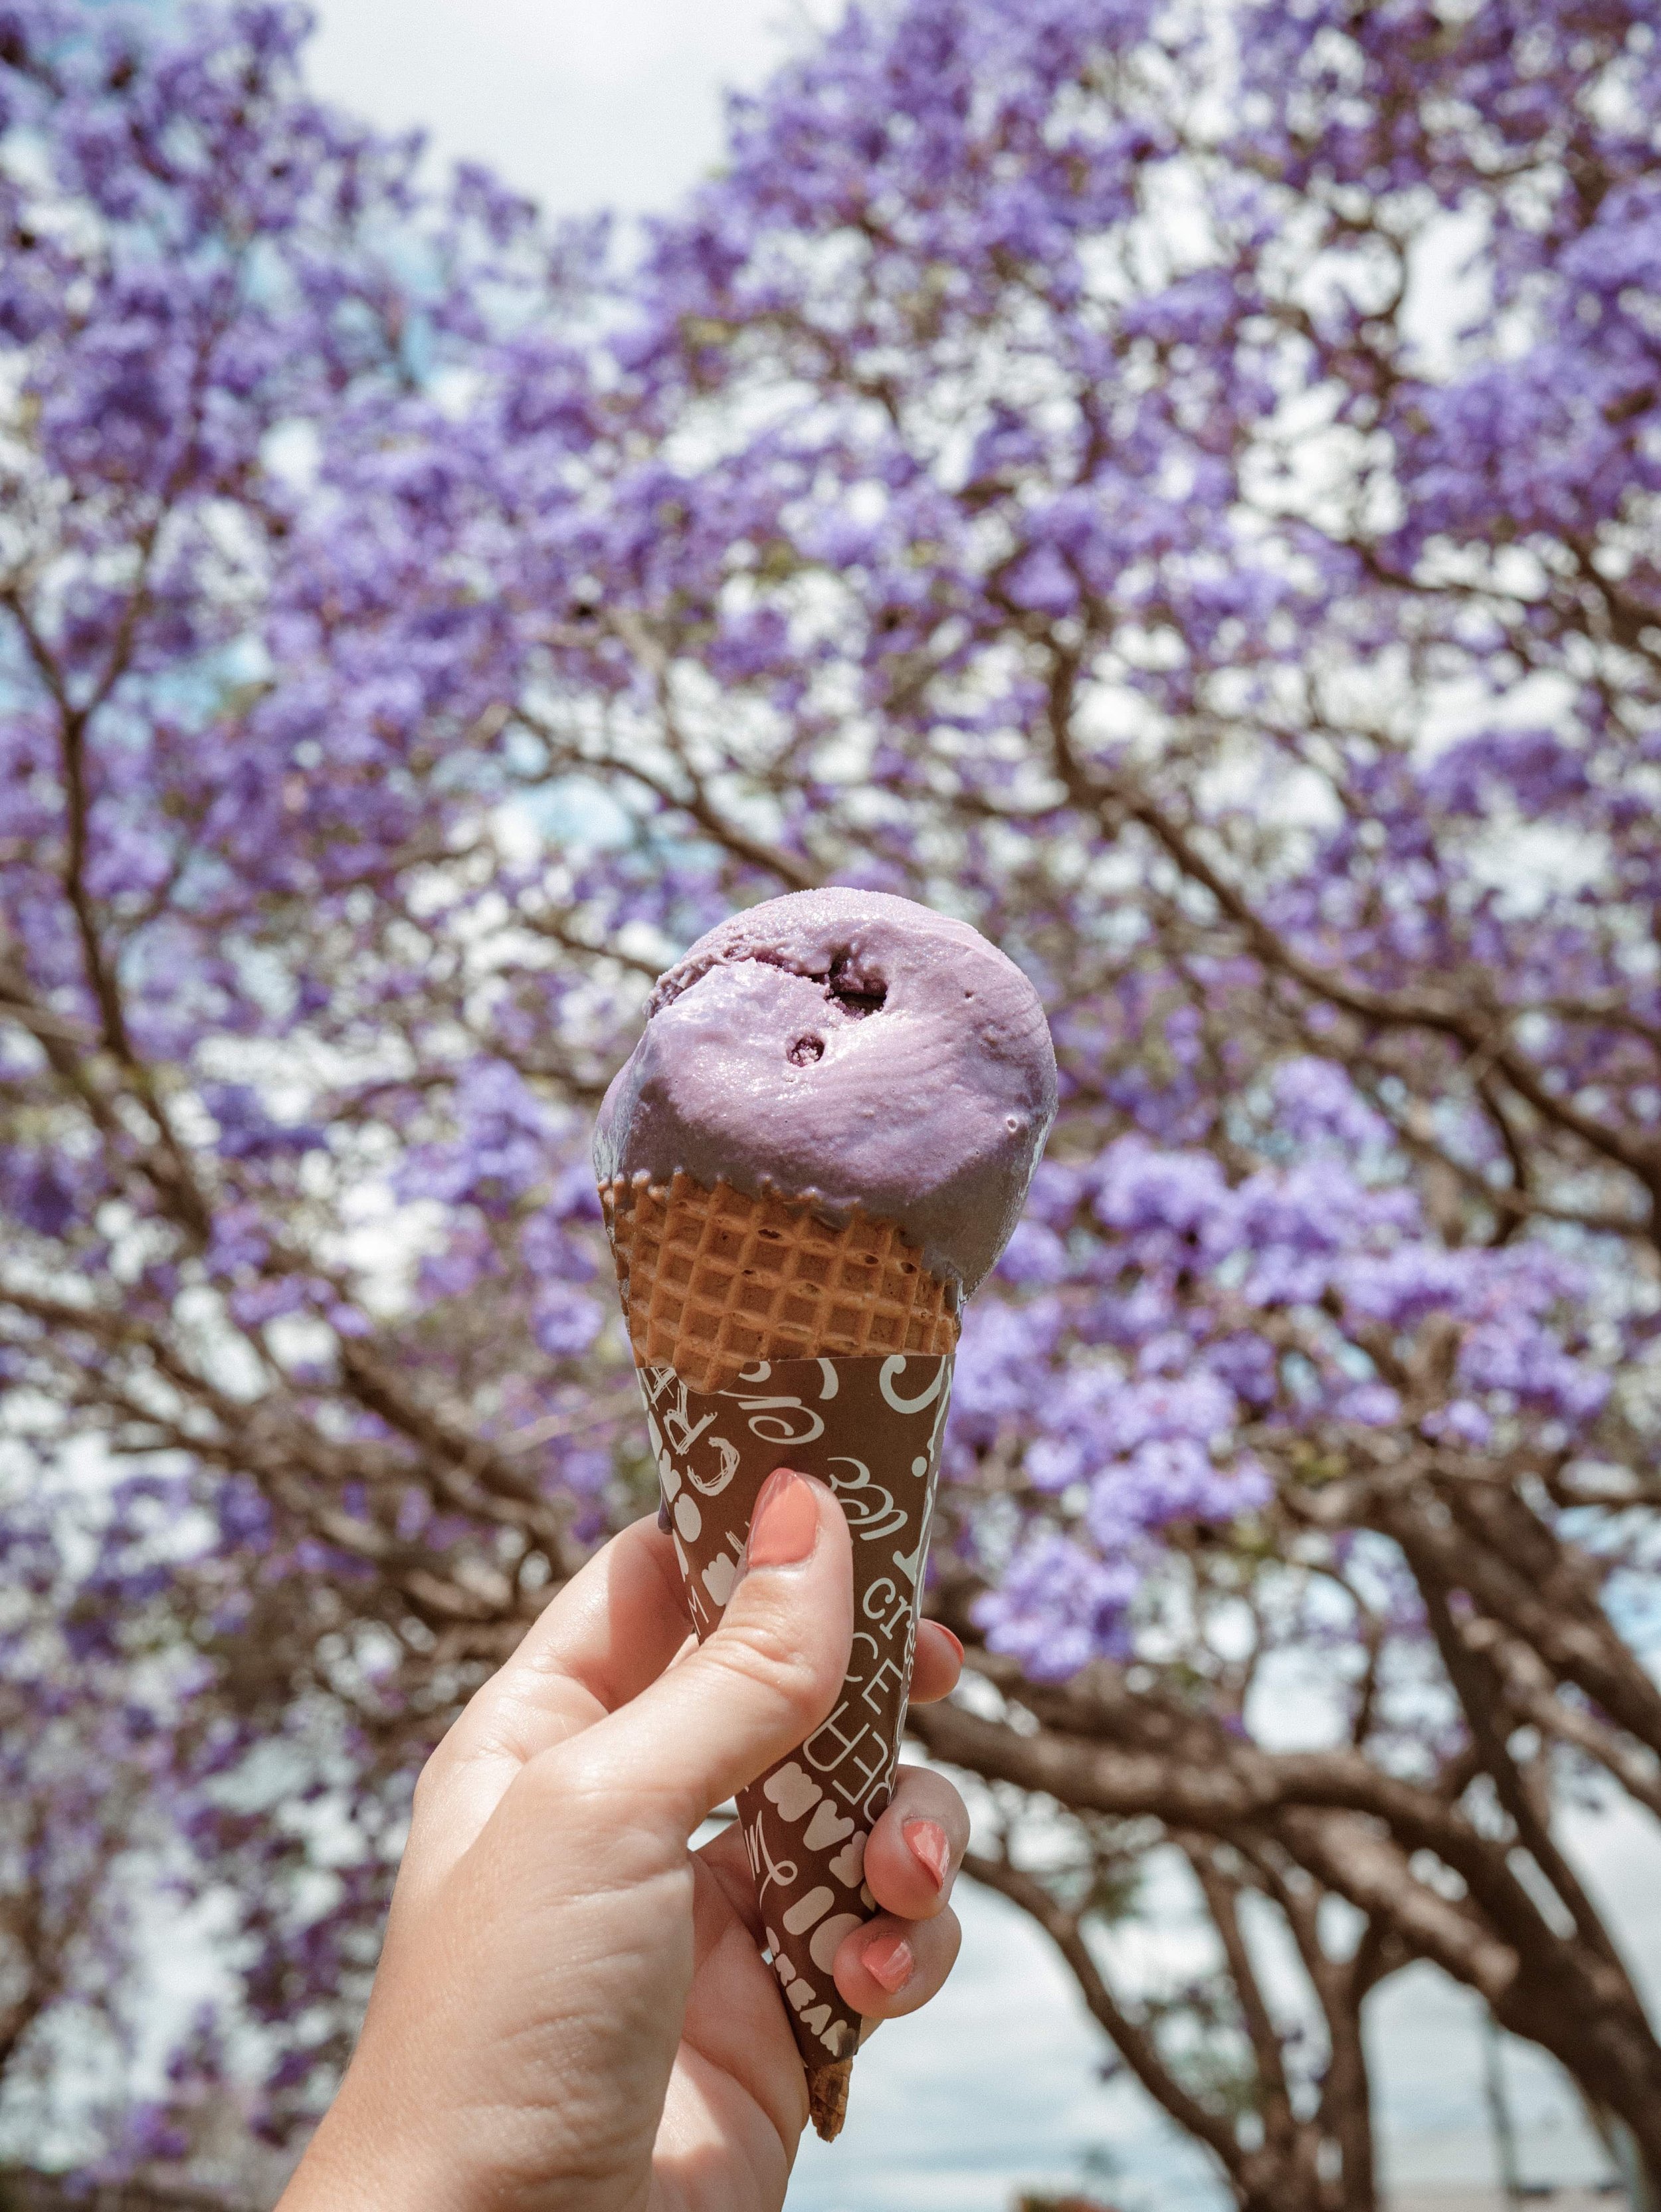 Jacaranda flavoured ice cream purple - I Scream - Grafton - New South Wales (NSW) - Australia